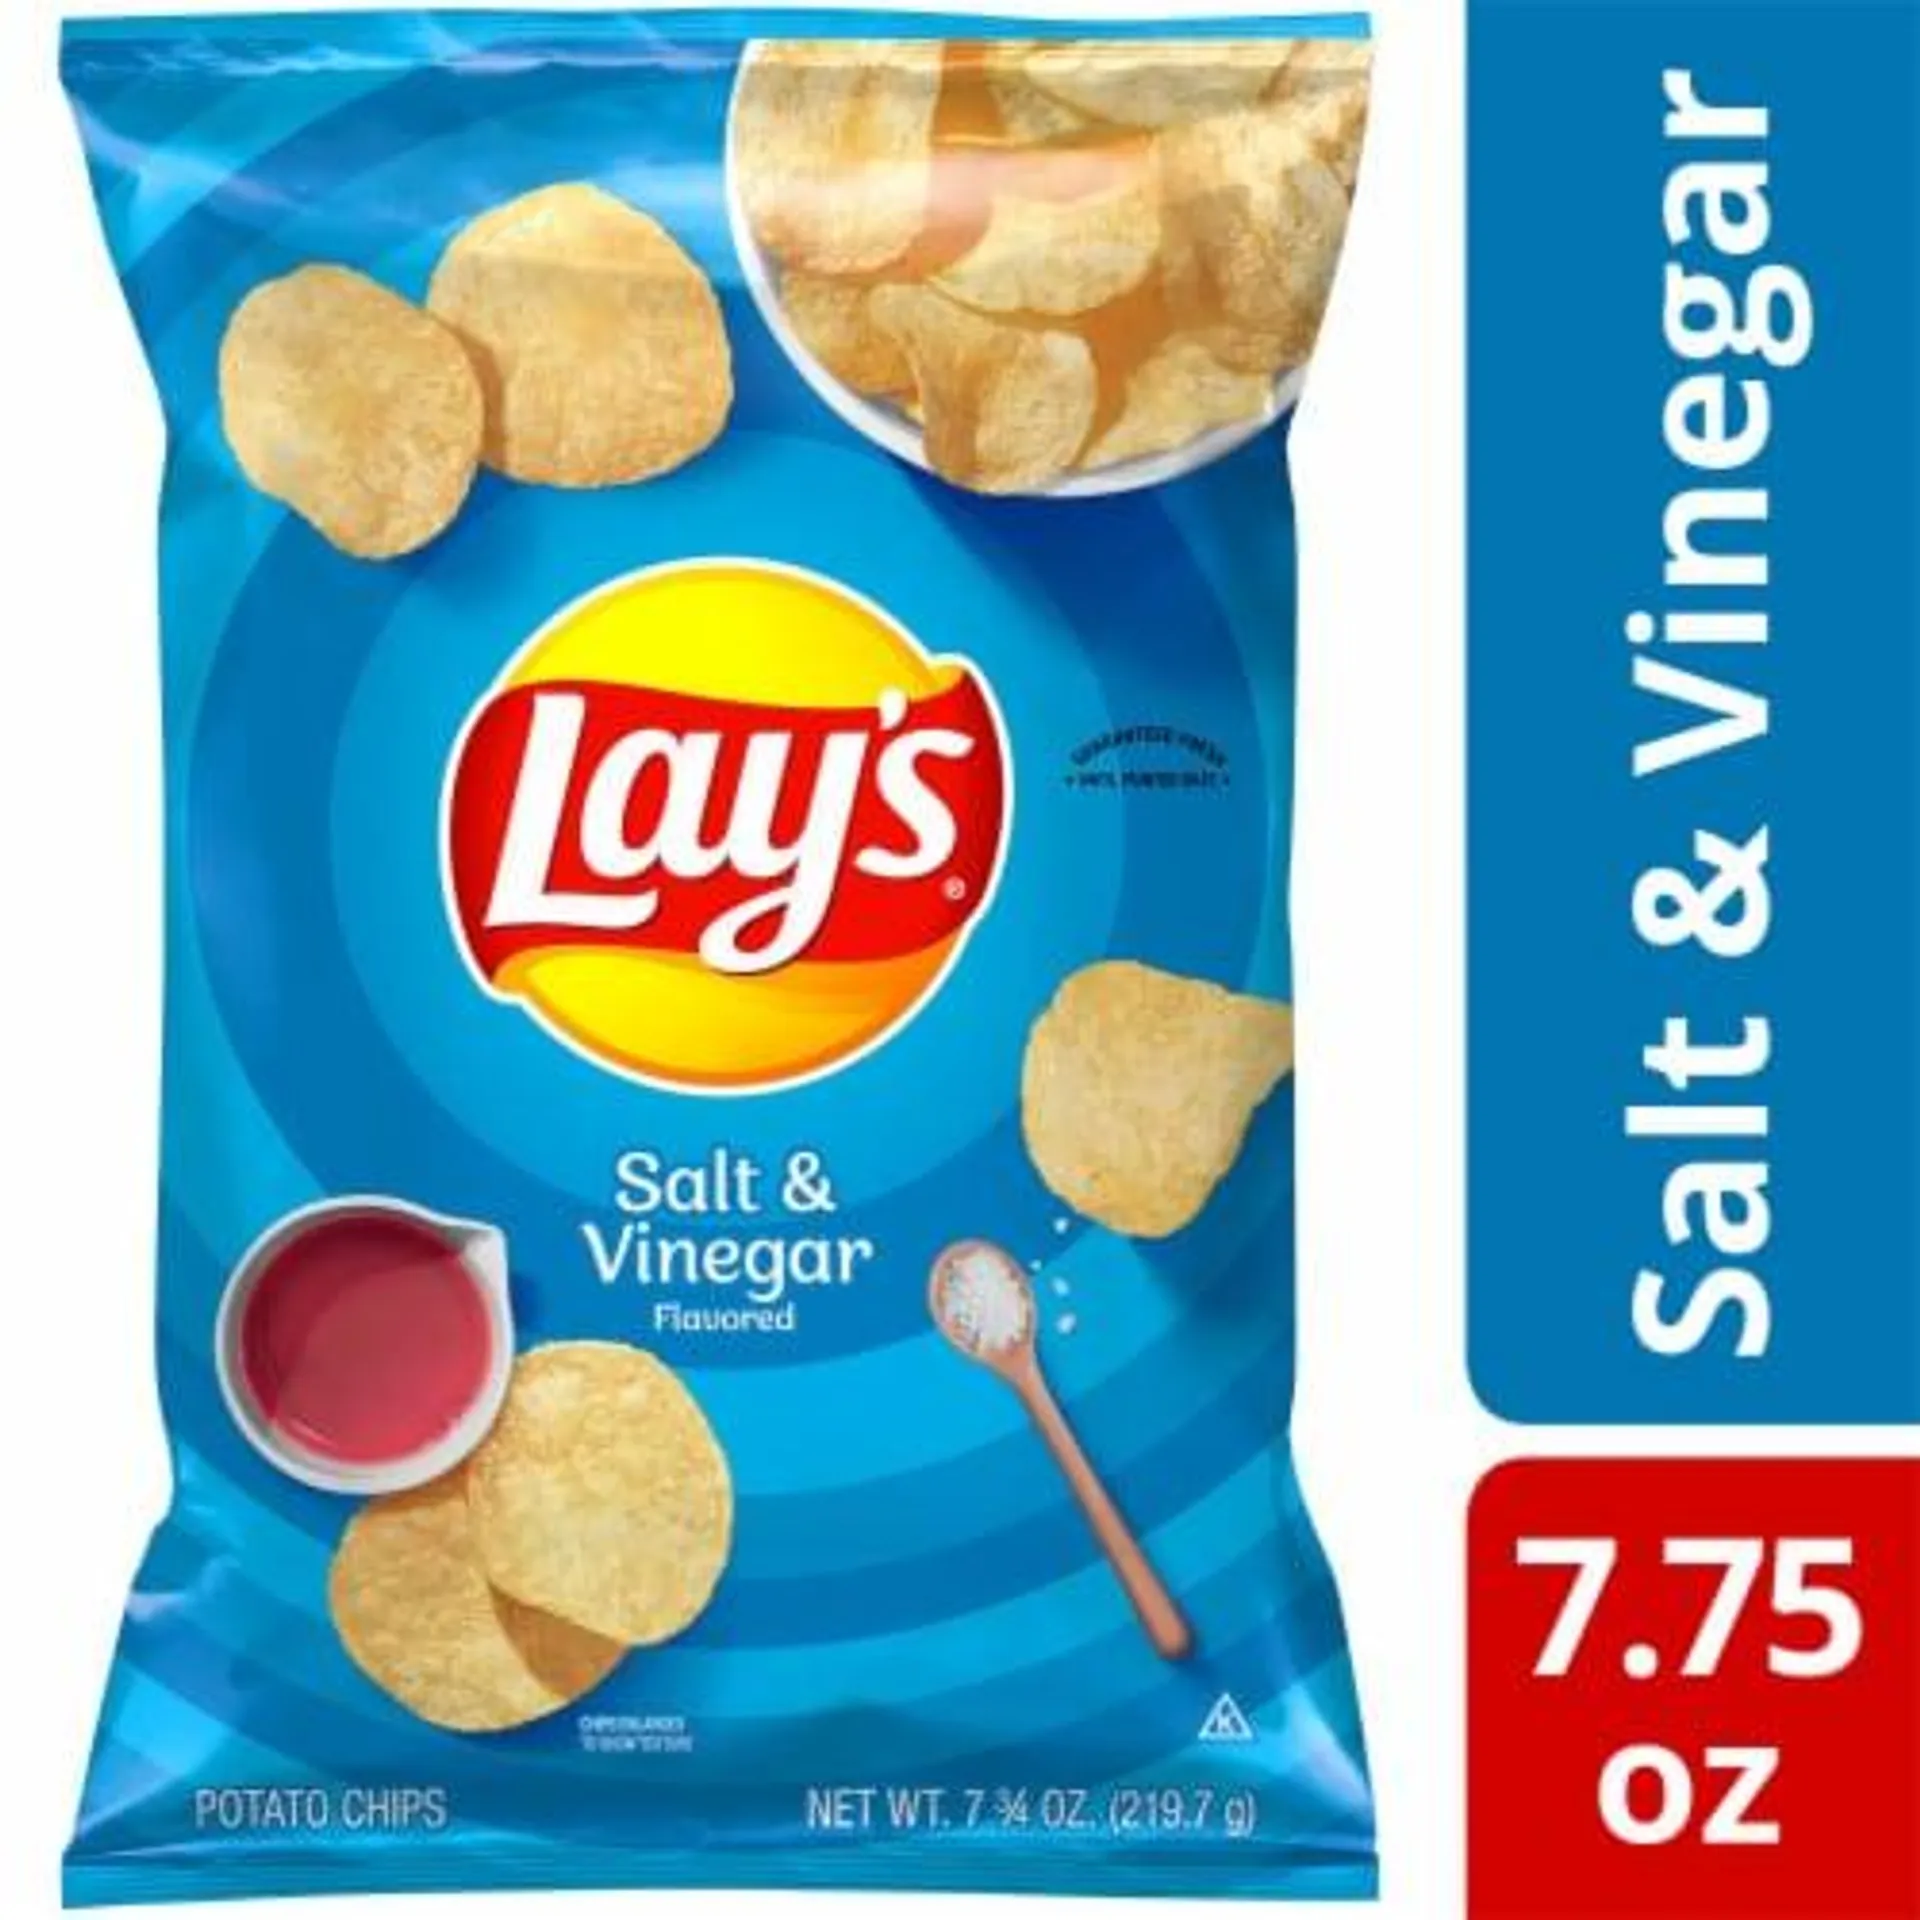 Lay's Salt and Vinegar Flavor Potato Chips